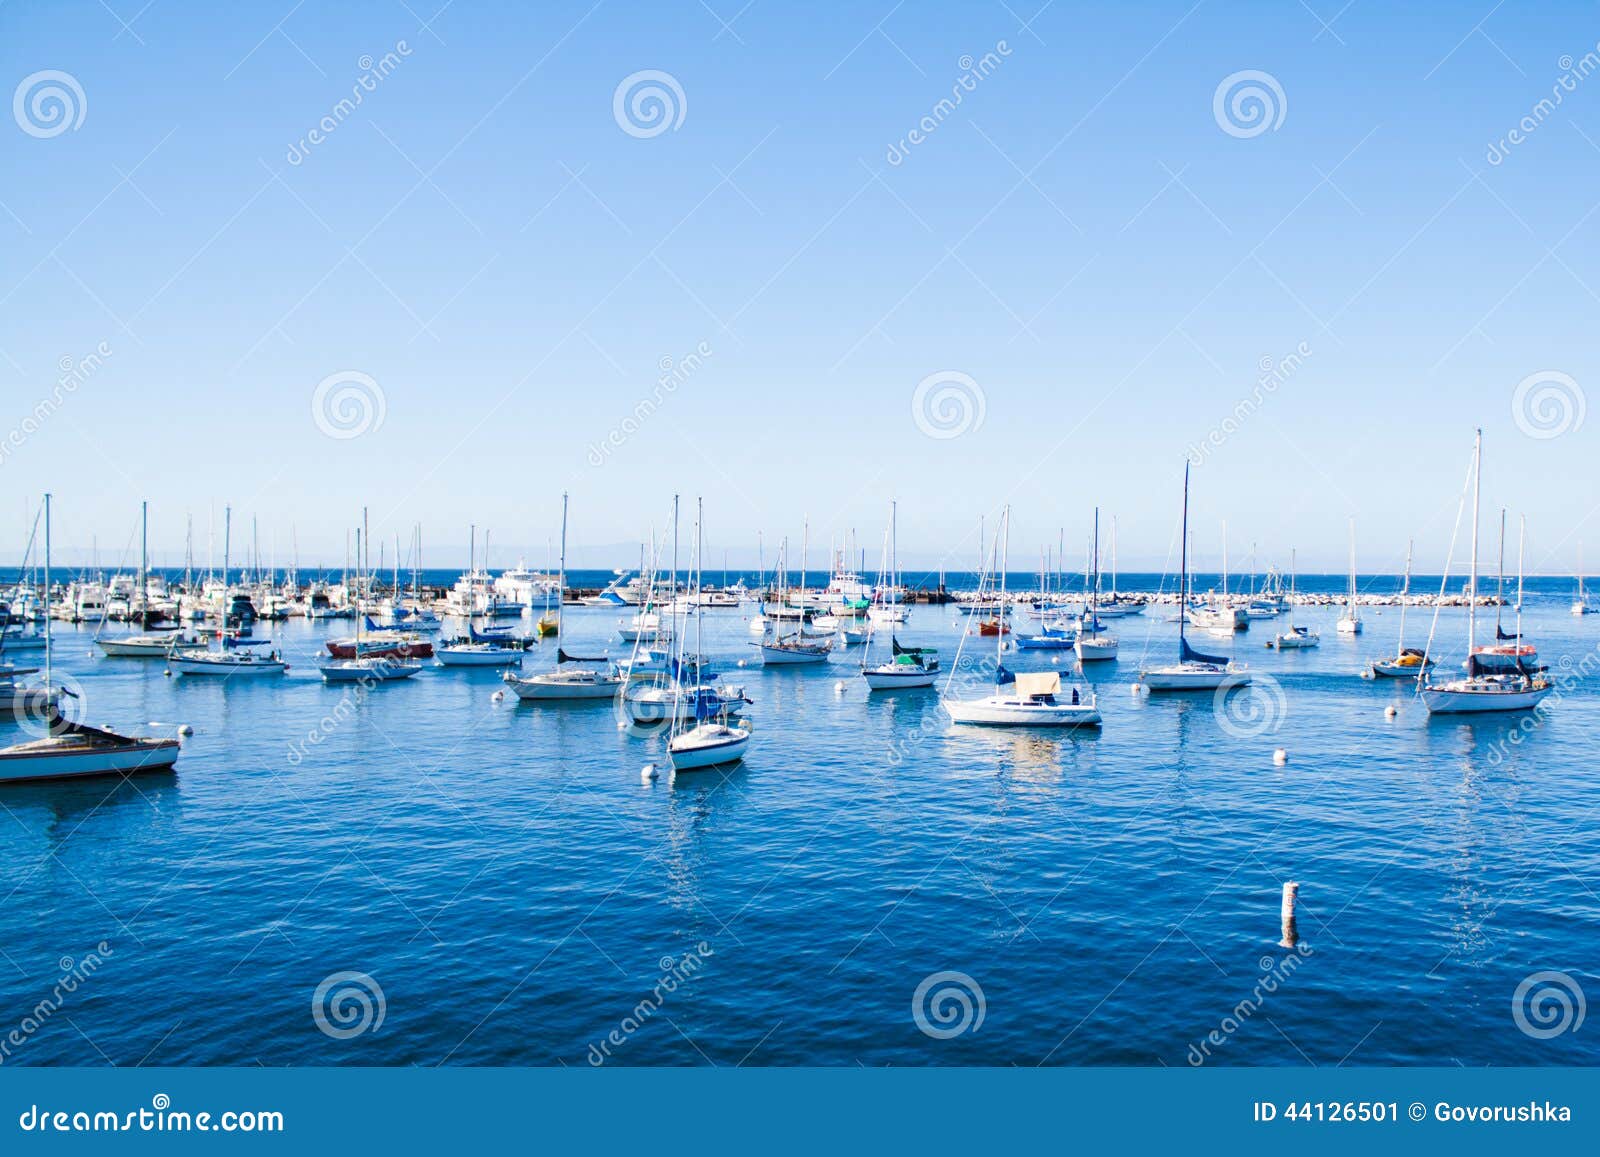 Marines stock image. Image of ocean, sailboats, horizon - 44126501